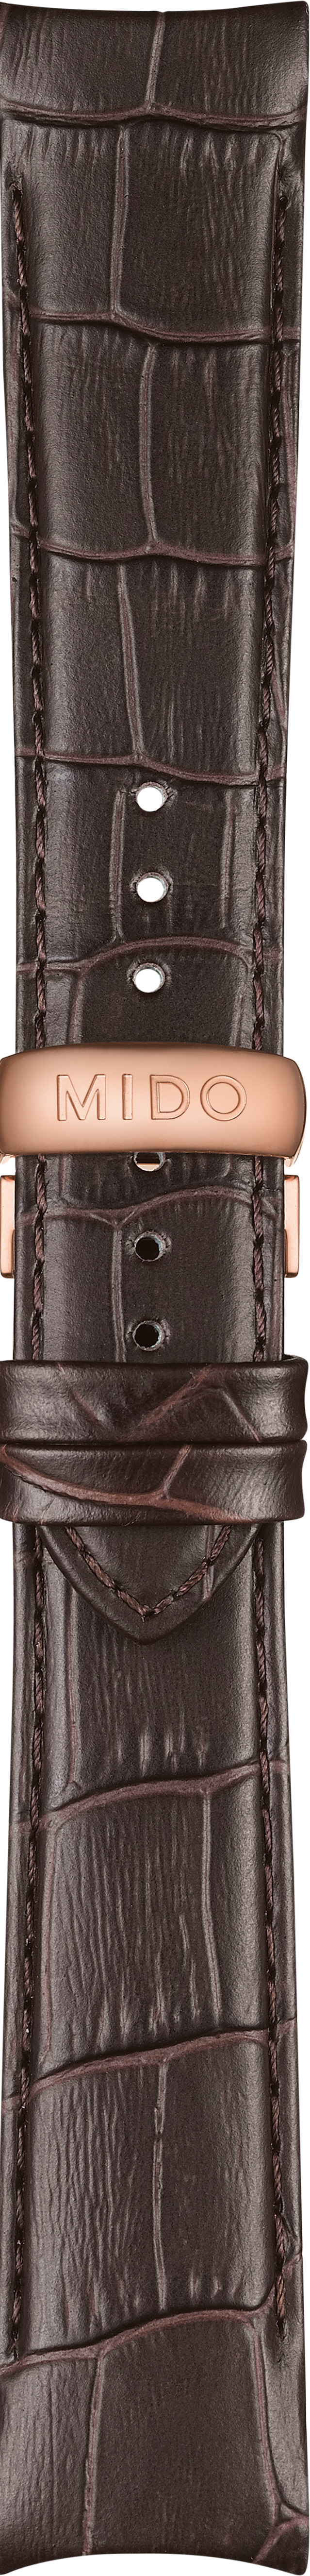 Mido Belluna brown cowhide leather strap